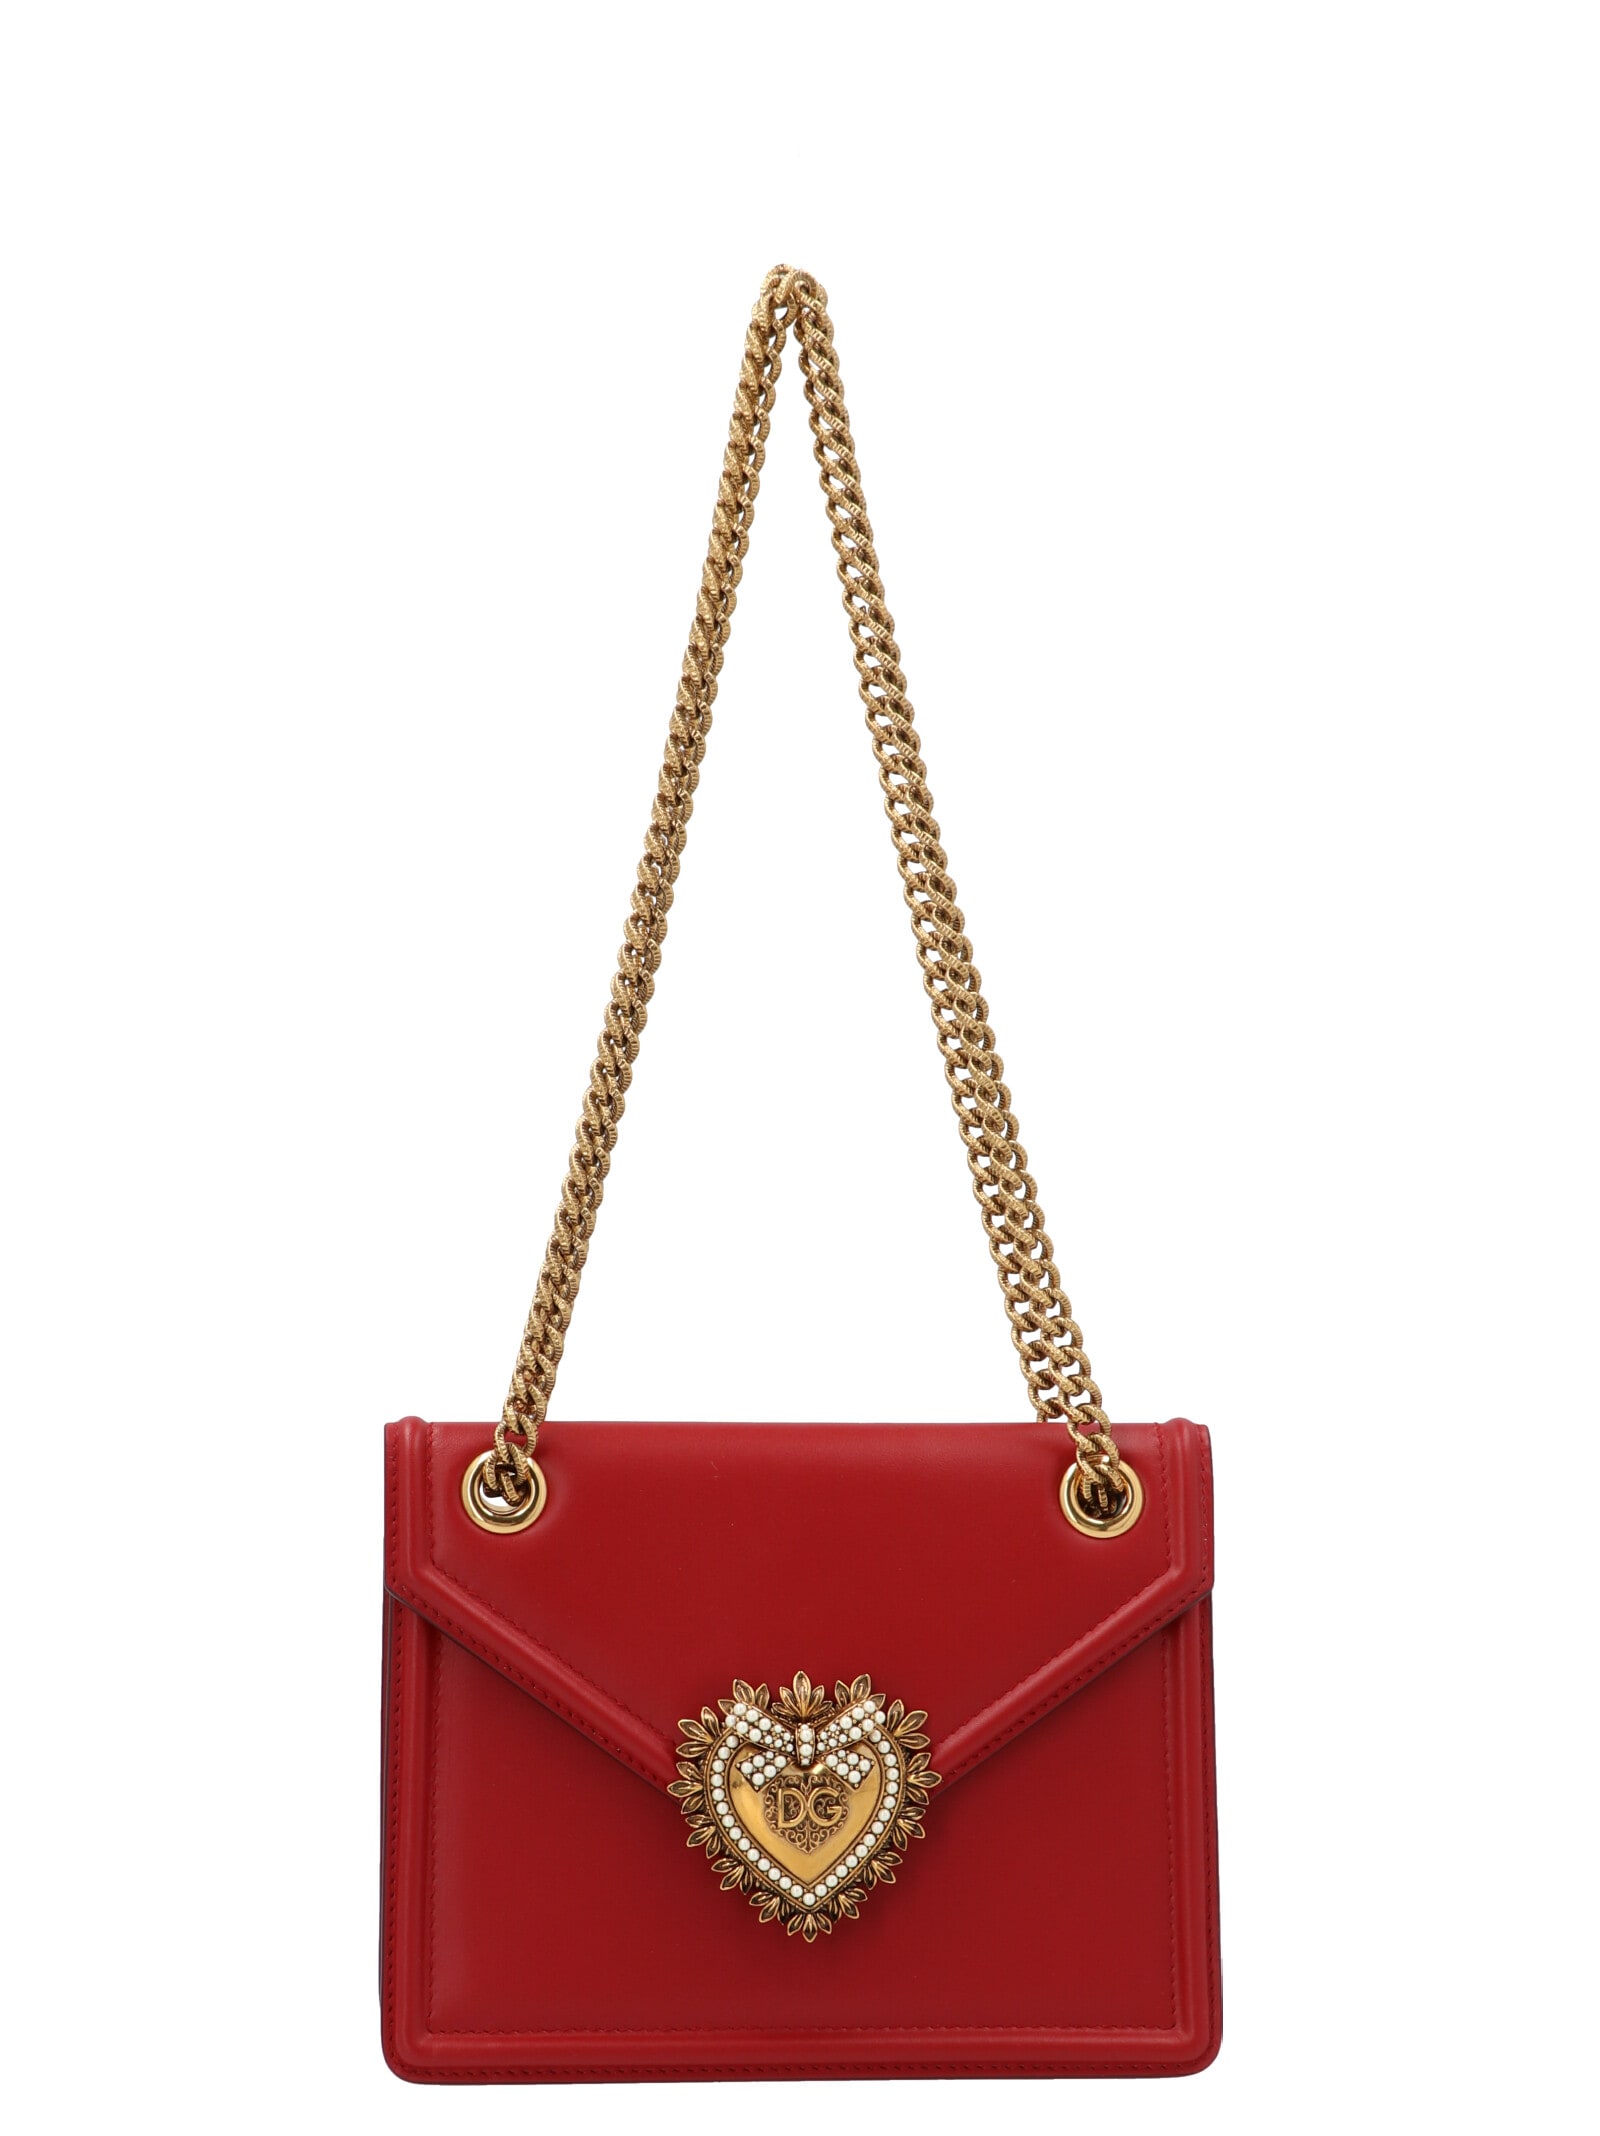 Dolce & Gabbana devotion Bag Bag